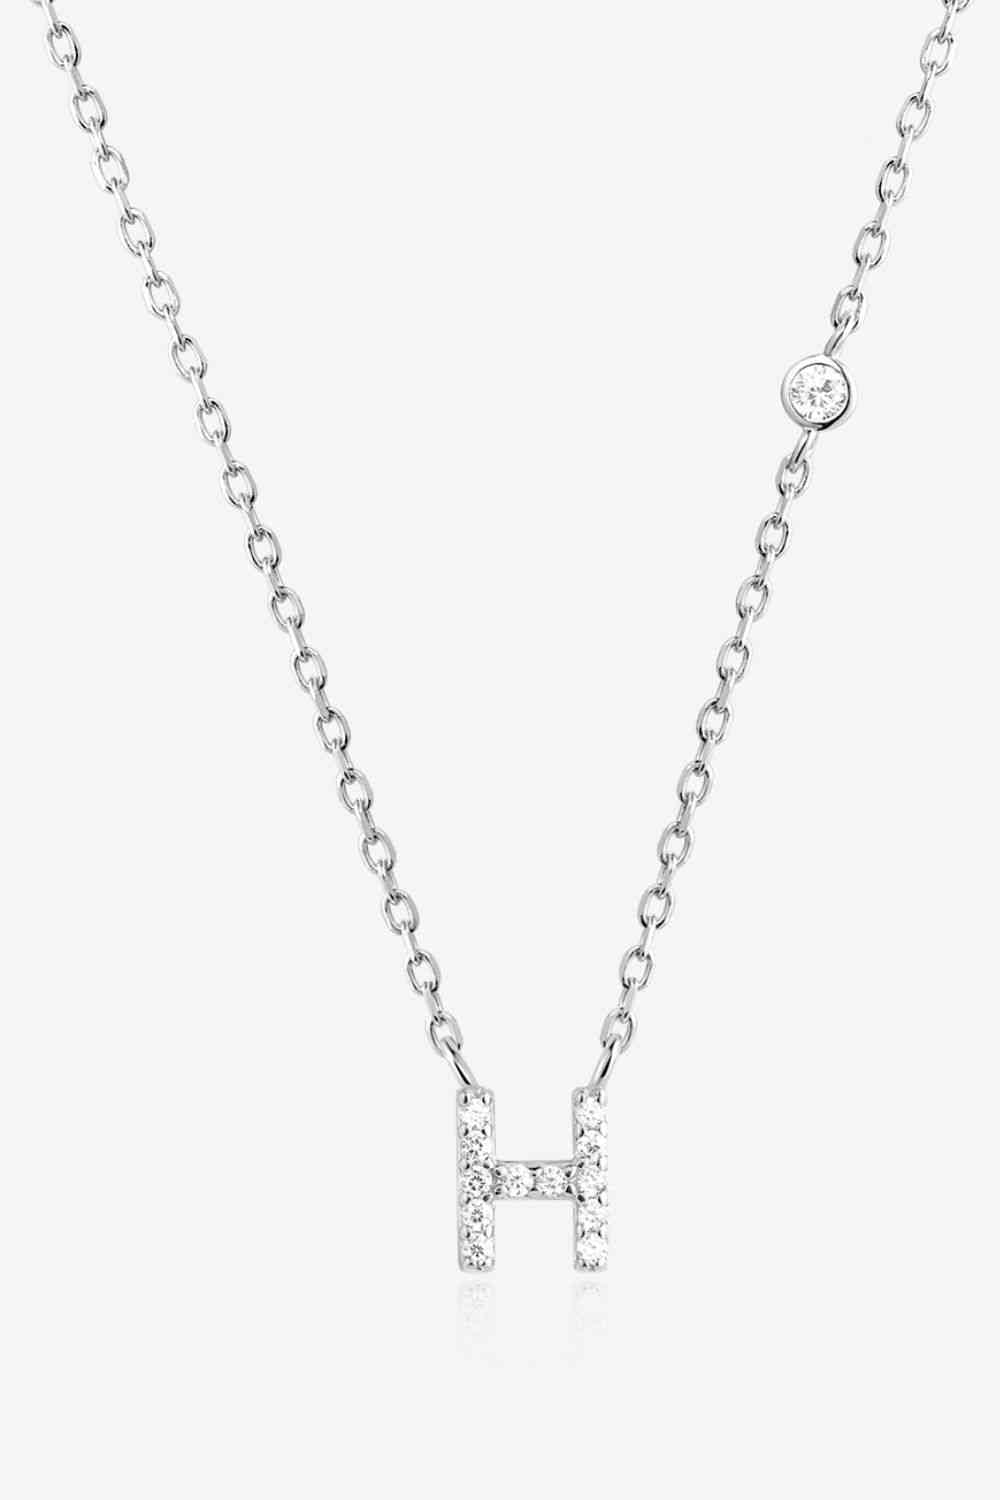 G To K Zircon 925 Sterling Silver Necklace - Pahabu - Women Fashion & Jewelry